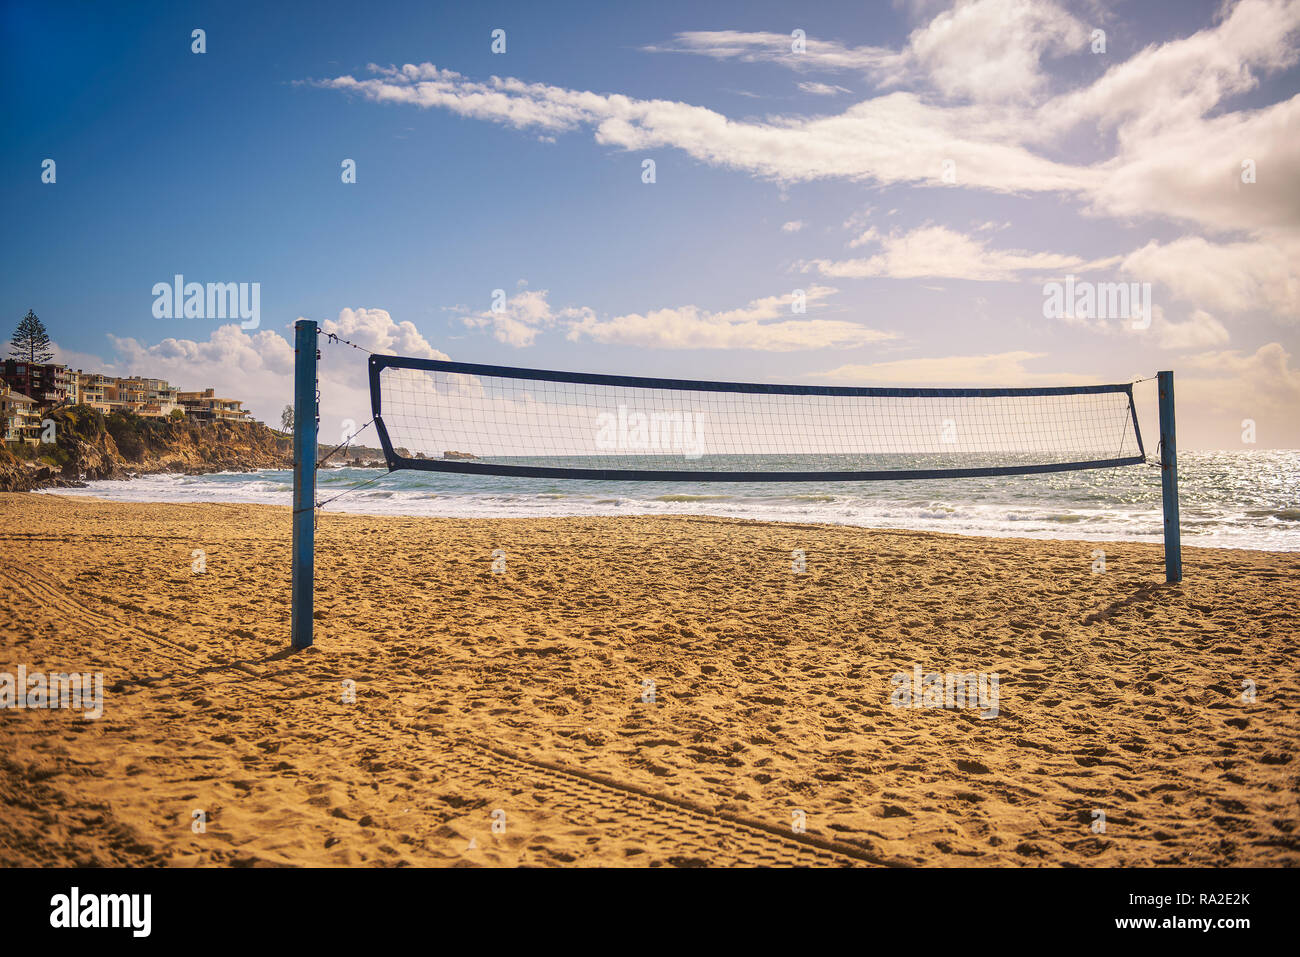 Filet de beach-volley sur la plage d'État Corona del Mar, près de Los Angeles Banque D'Images